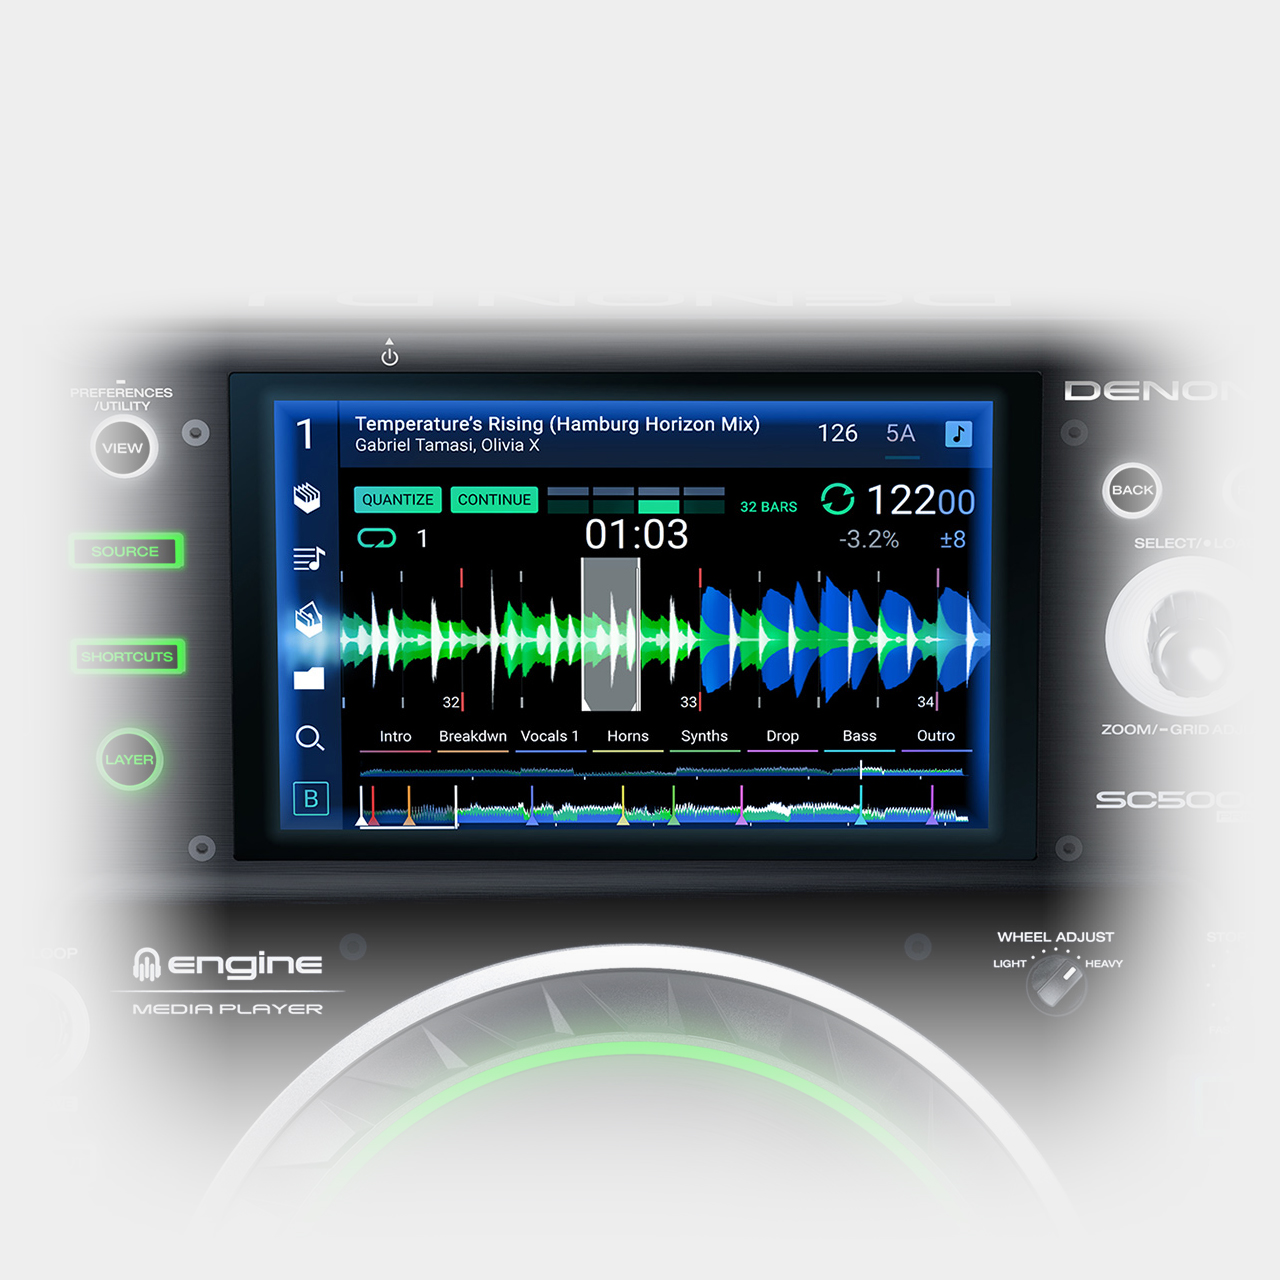 Reproductor multimedia profesional para DJ con pantalla multitáctil de 7″ Denon  DJ SC5000 Prime – Sonotec